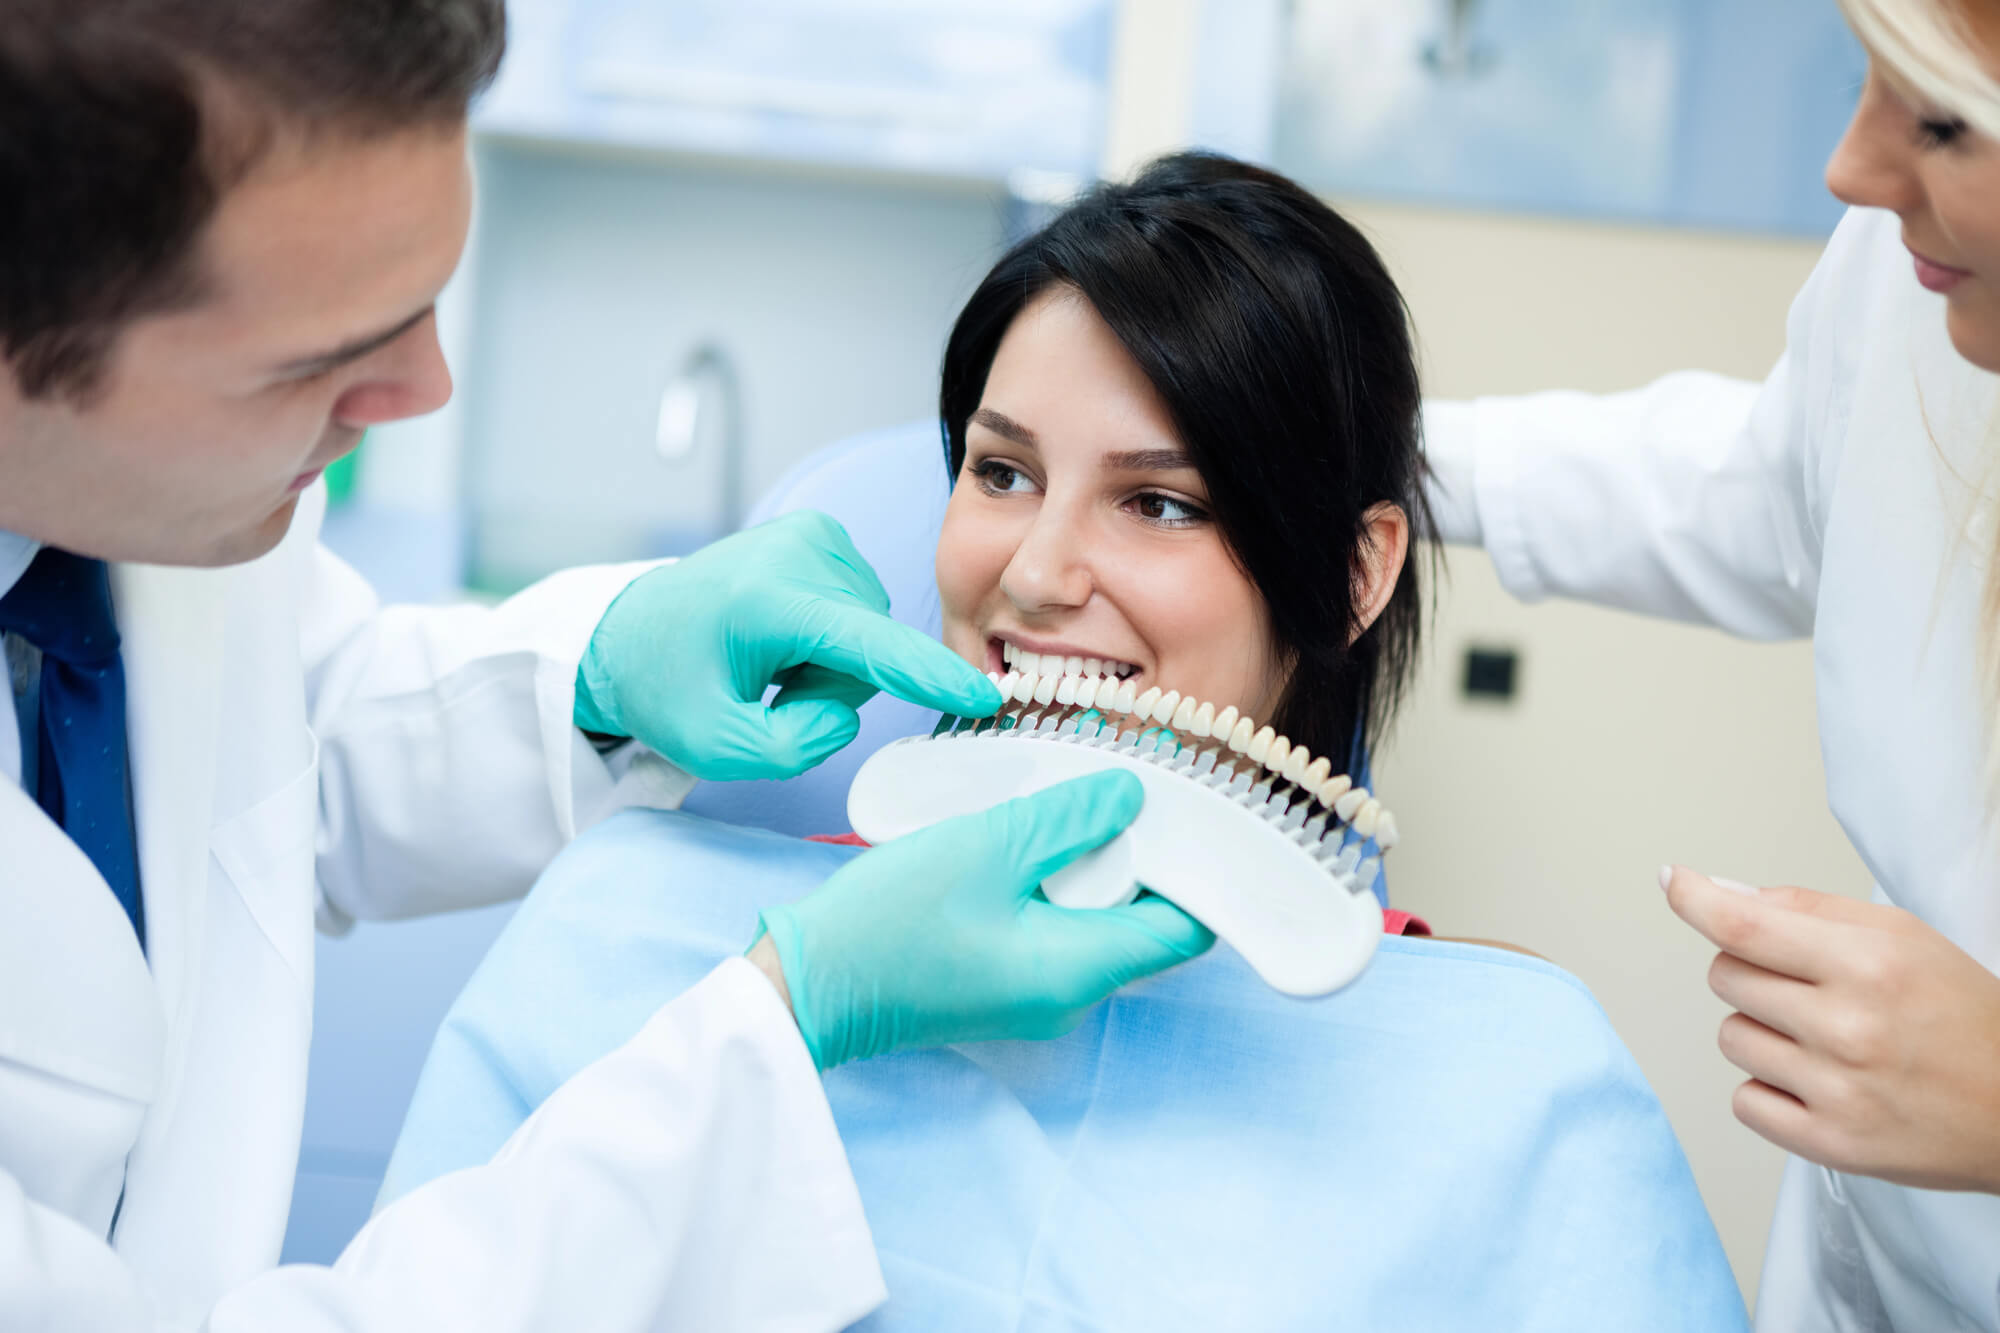 cosmetic dentist las vegas examines patient's teeth